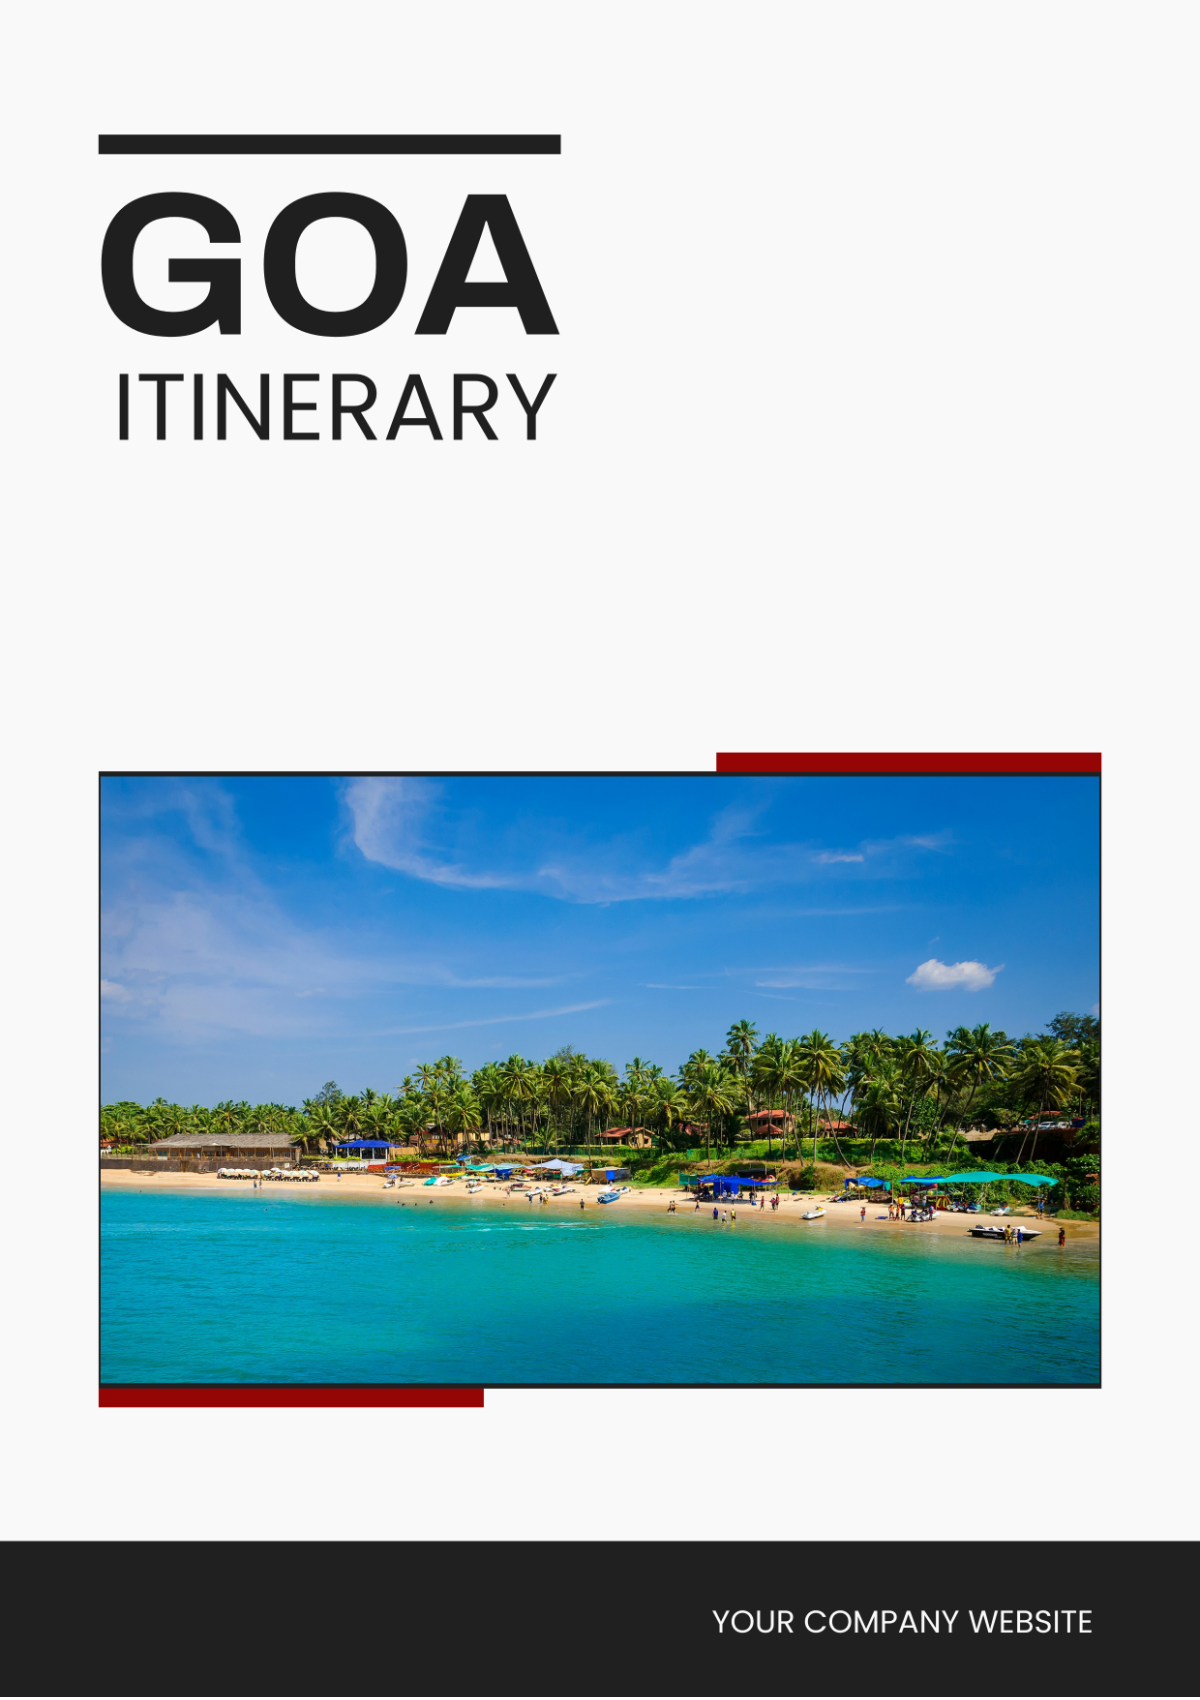 Free 4 Day Goa Itinerary Template